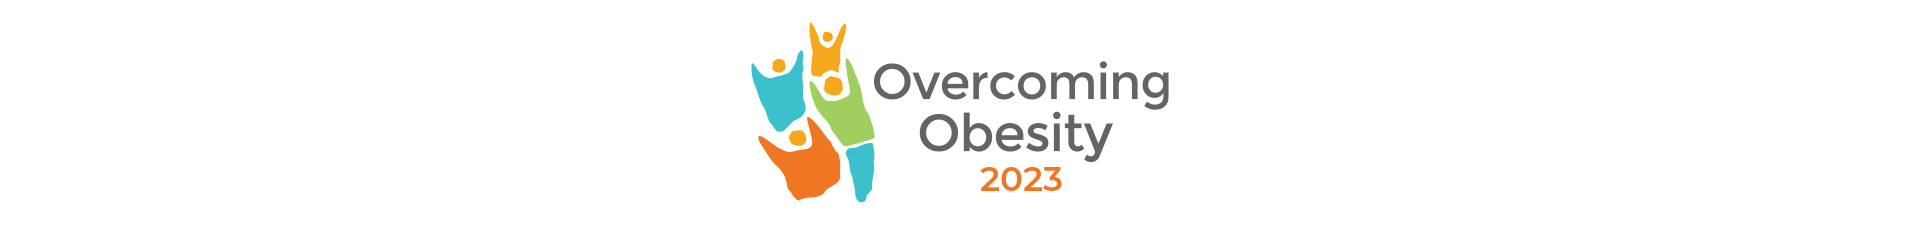 Overcoming Obesity 2023 Event Banner